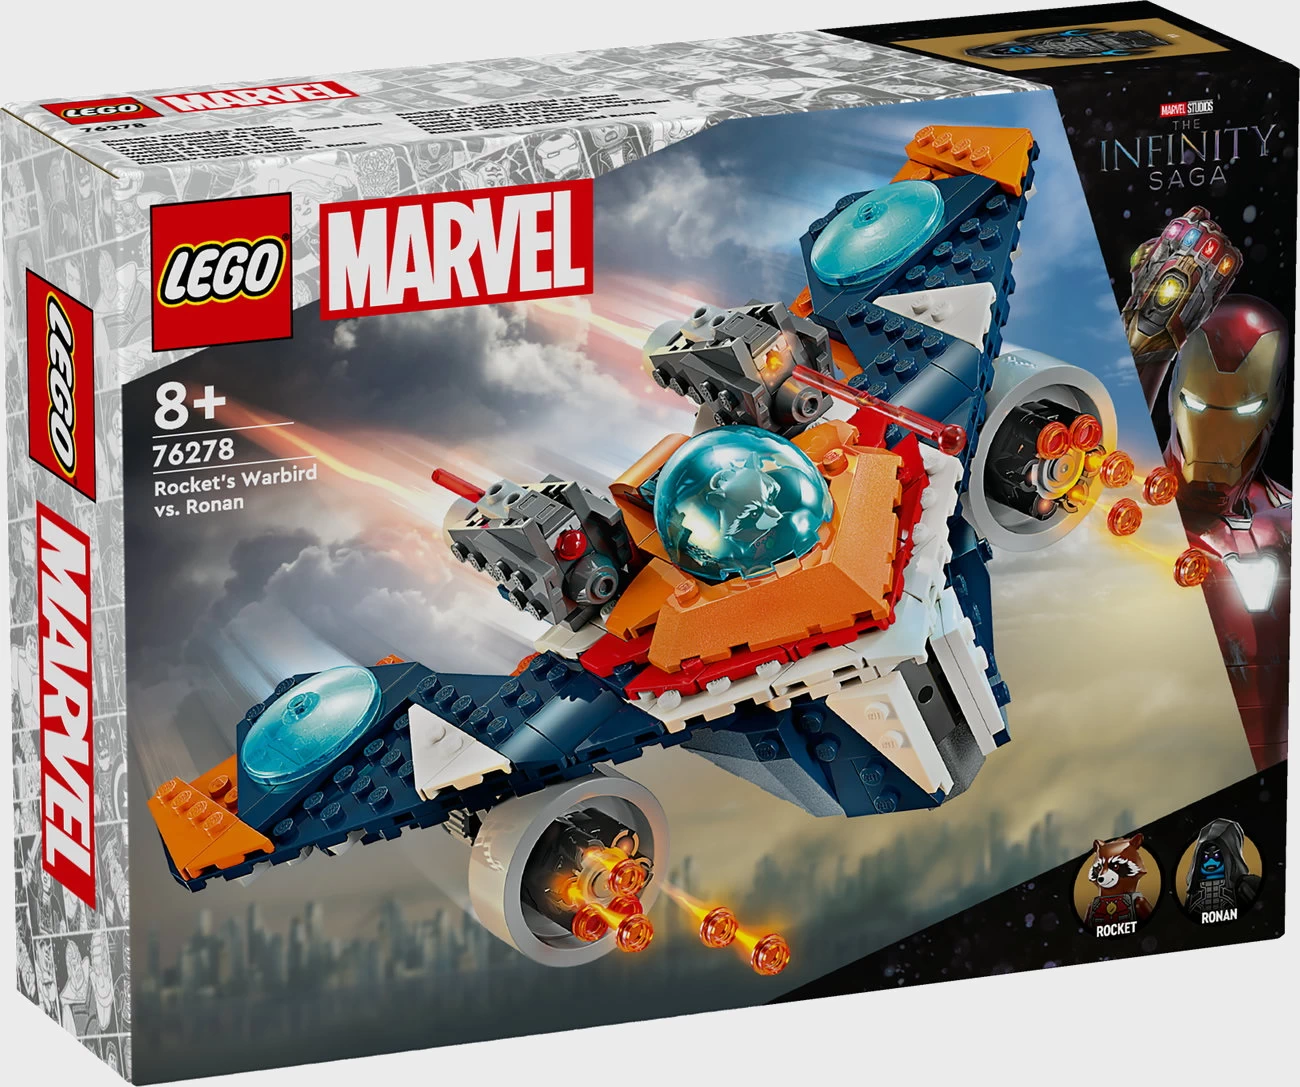 LEGO Marvel 76278 - Rockets Raumschiff vs Ronan